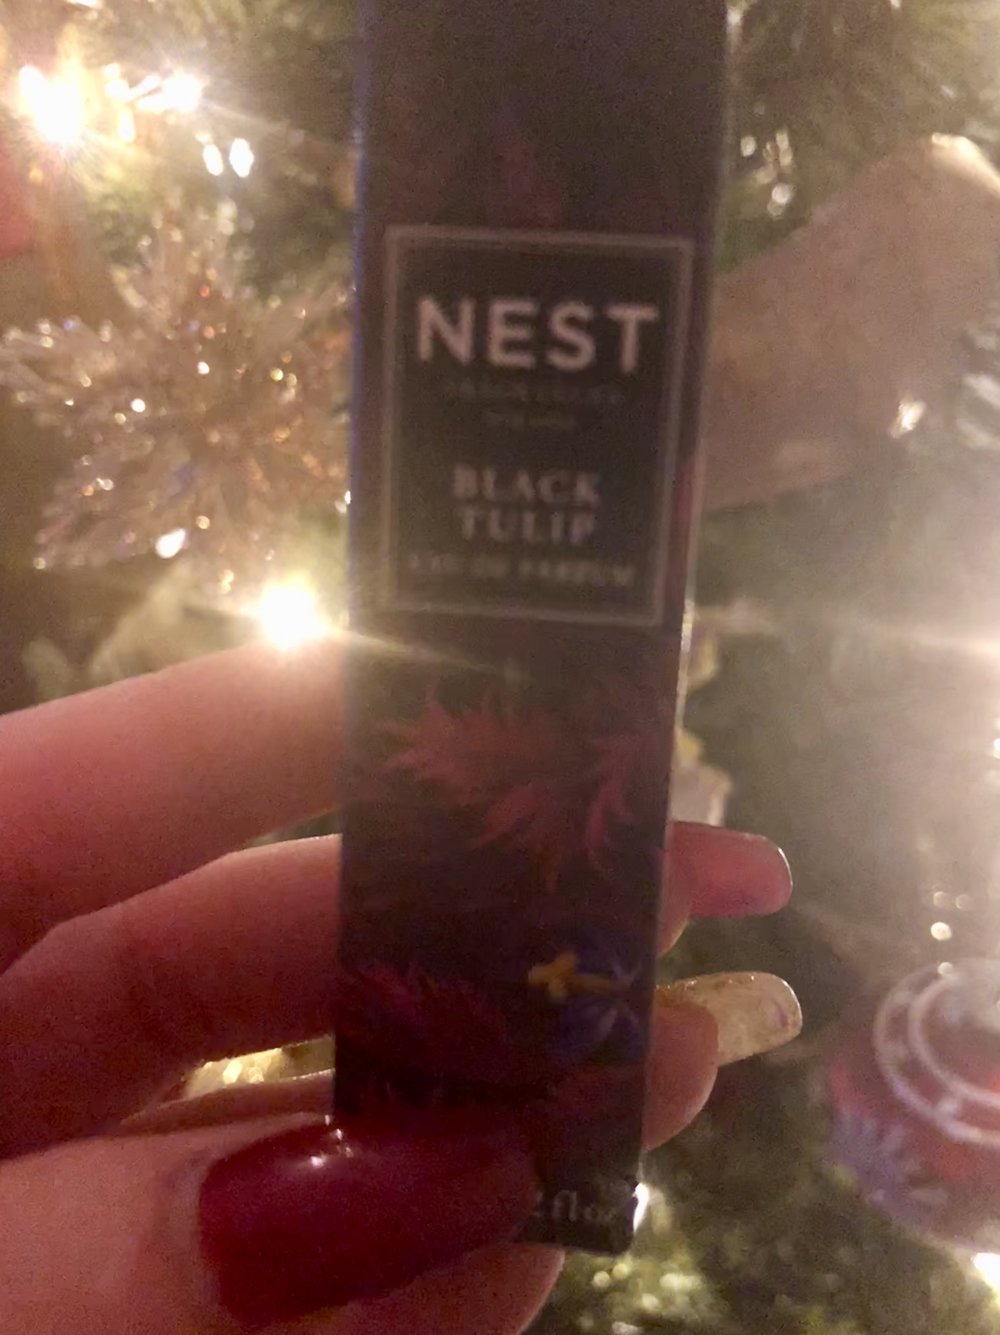 December 3:  NEST Black Tulip Rollerball Eau de Parfum